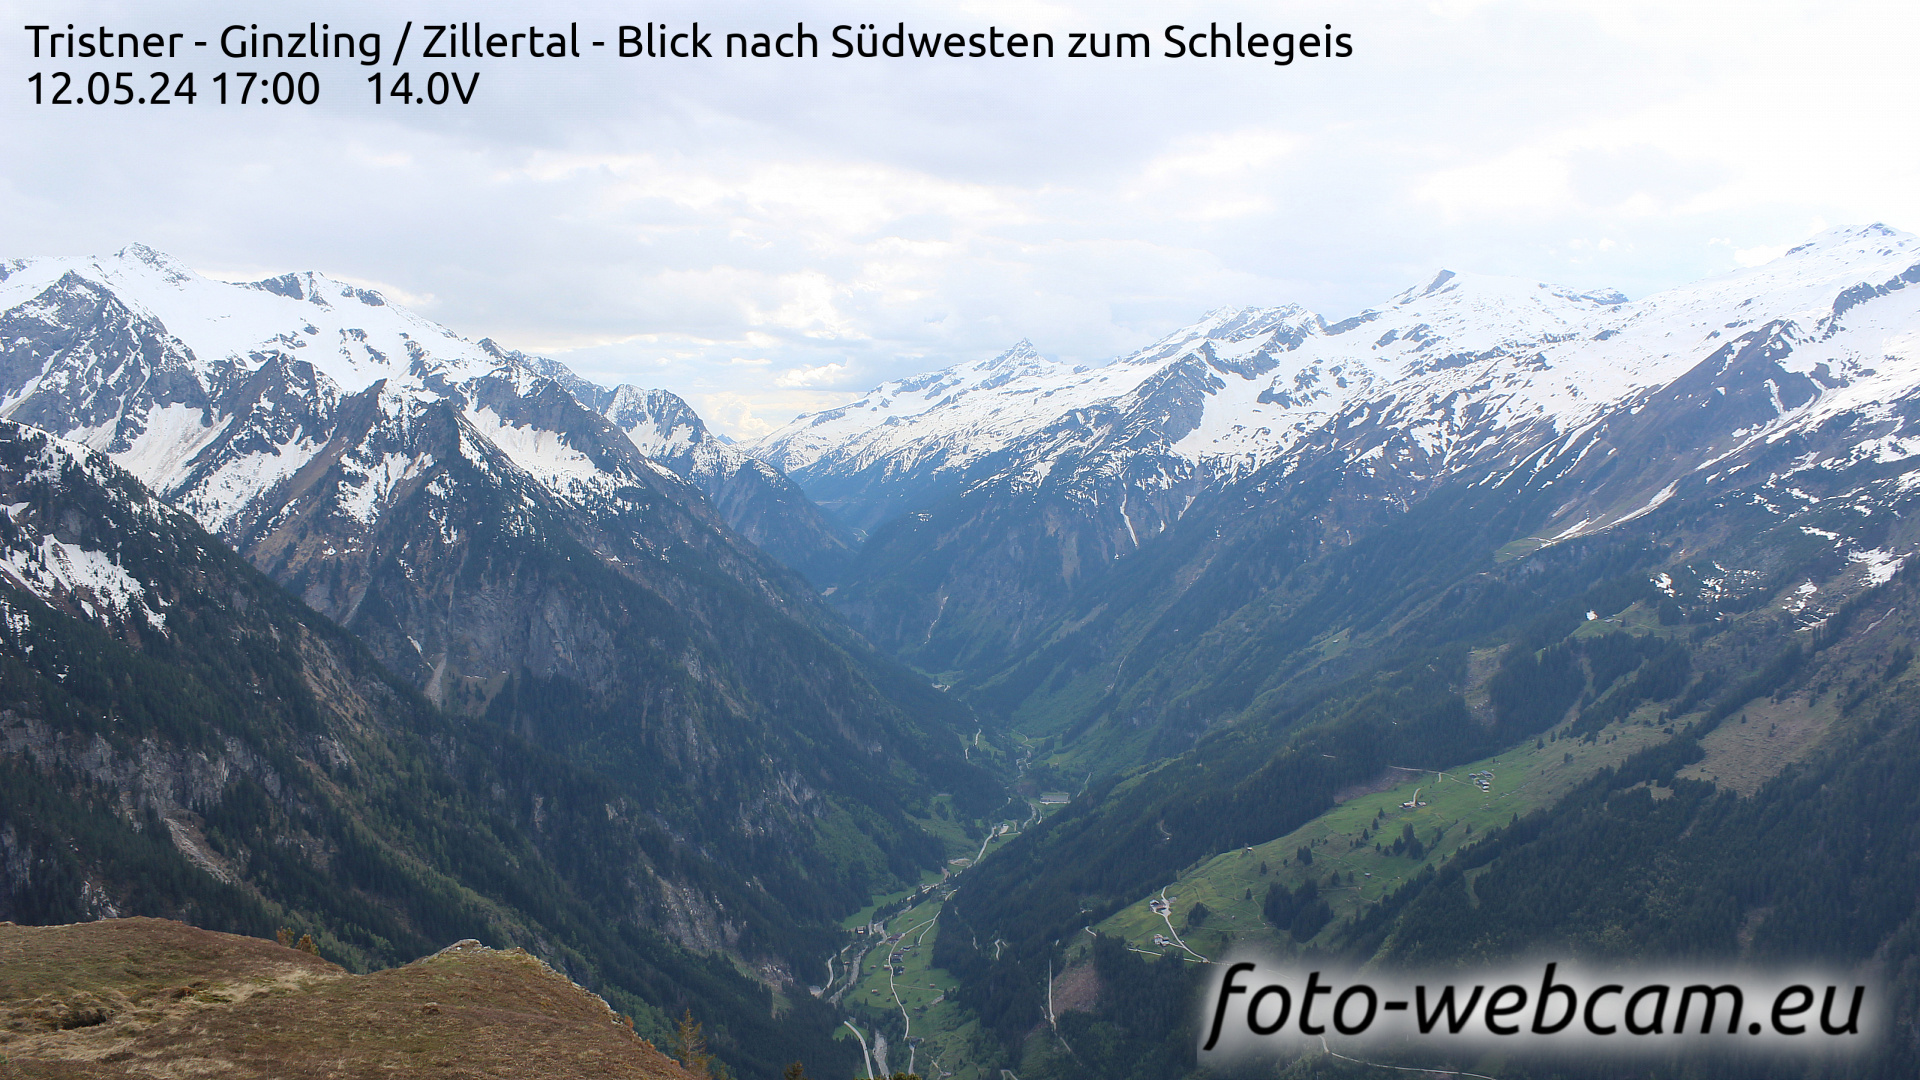 Mayrhofen Wed. 17:01